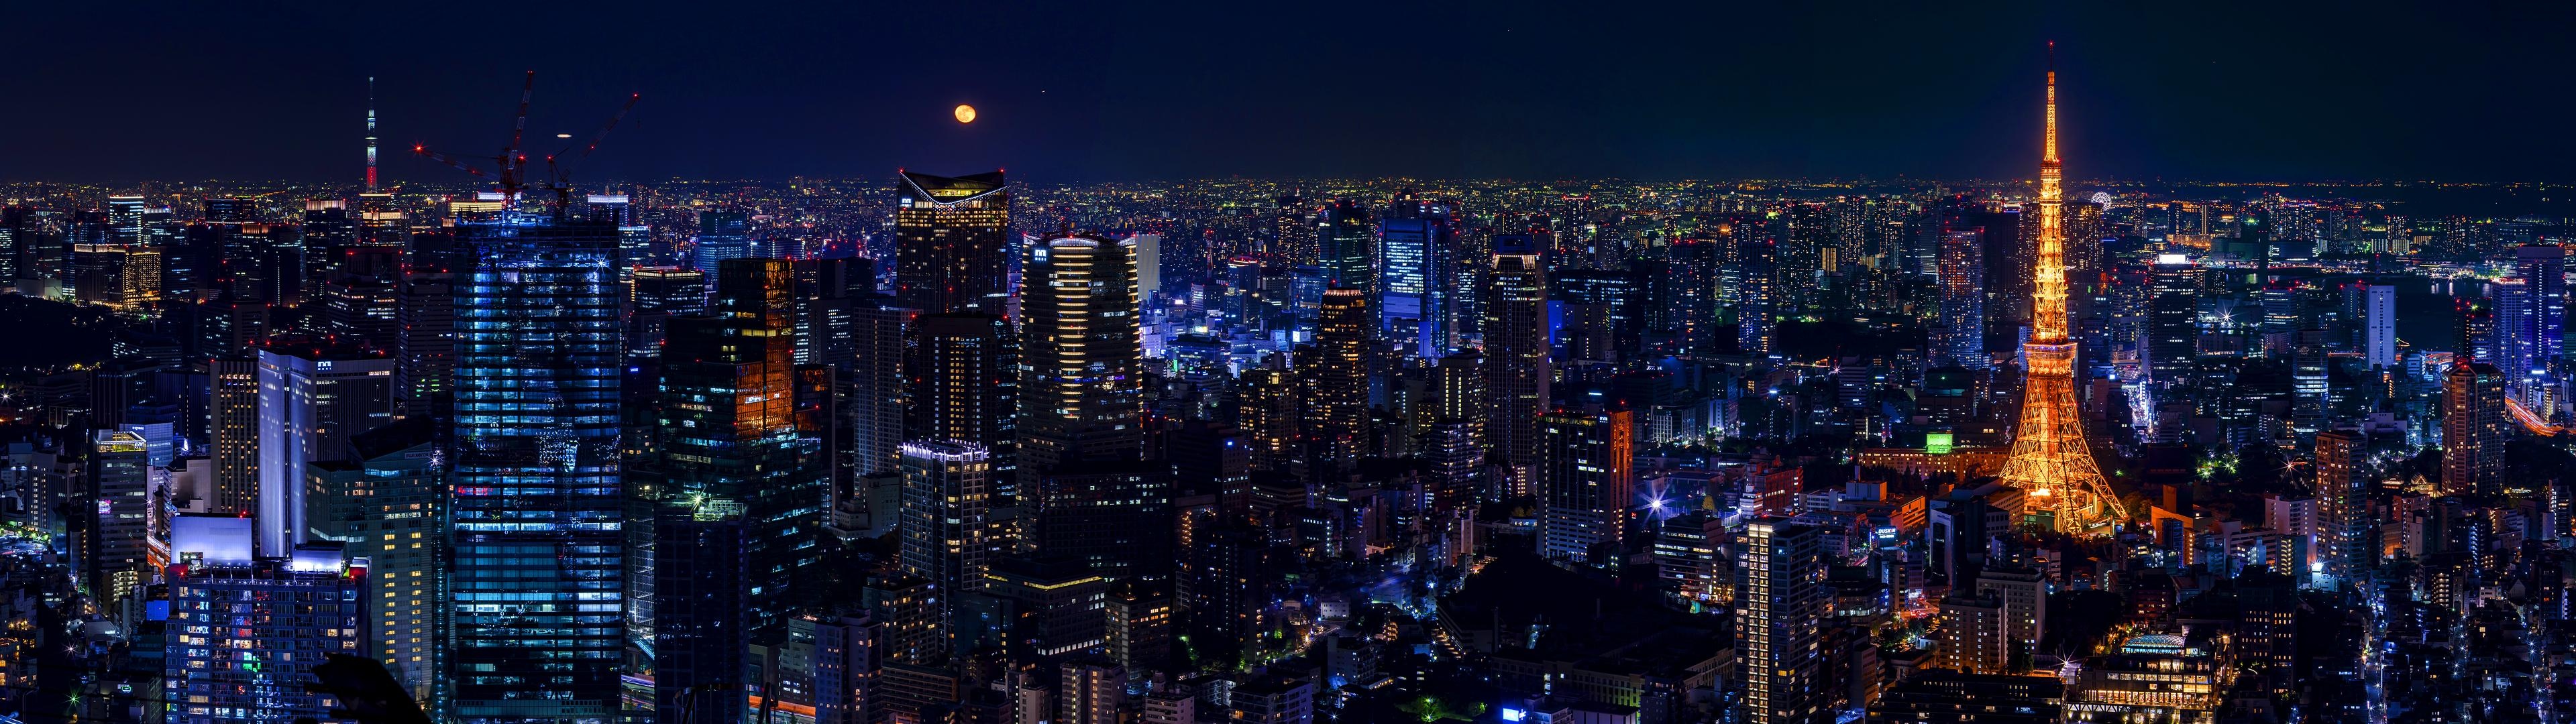 Japan Skyline, Tokyo, HD wallpaper, Background image, 3840x1080 Dual Screen Desktop